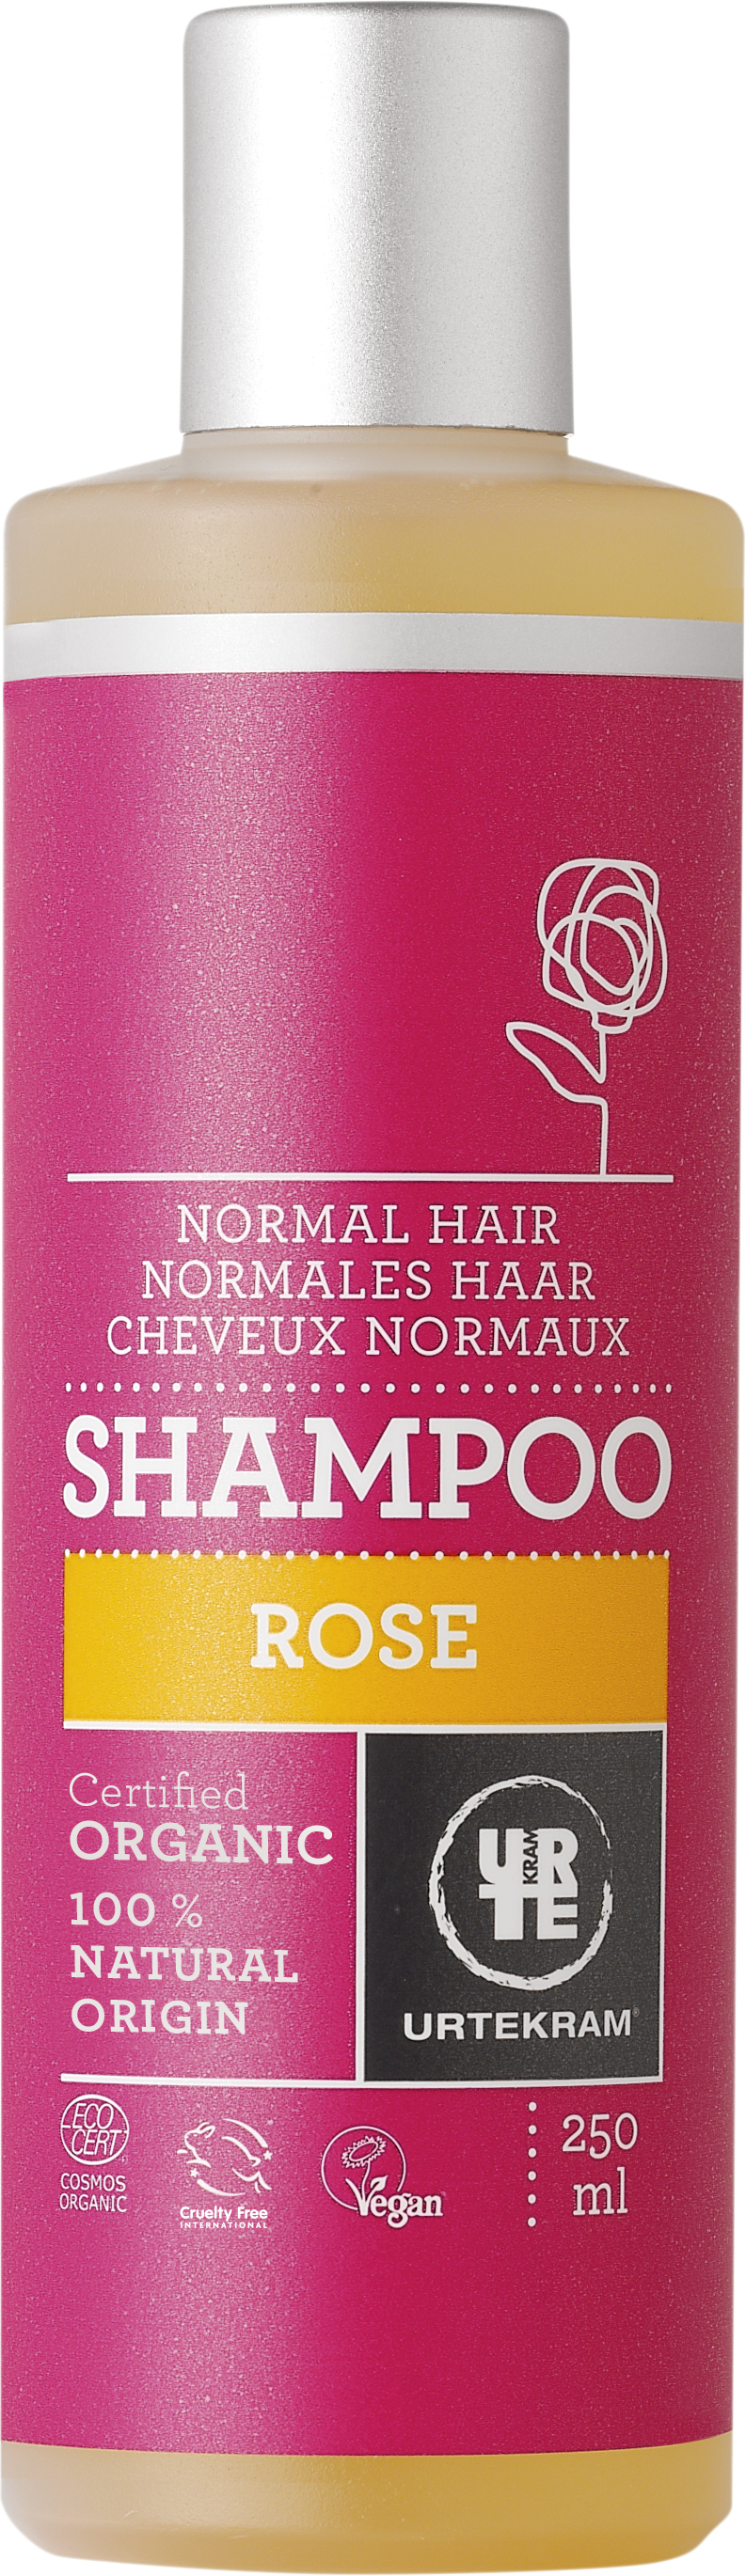 Rose Shampoo 250 ml Normales Haar  Urtekram